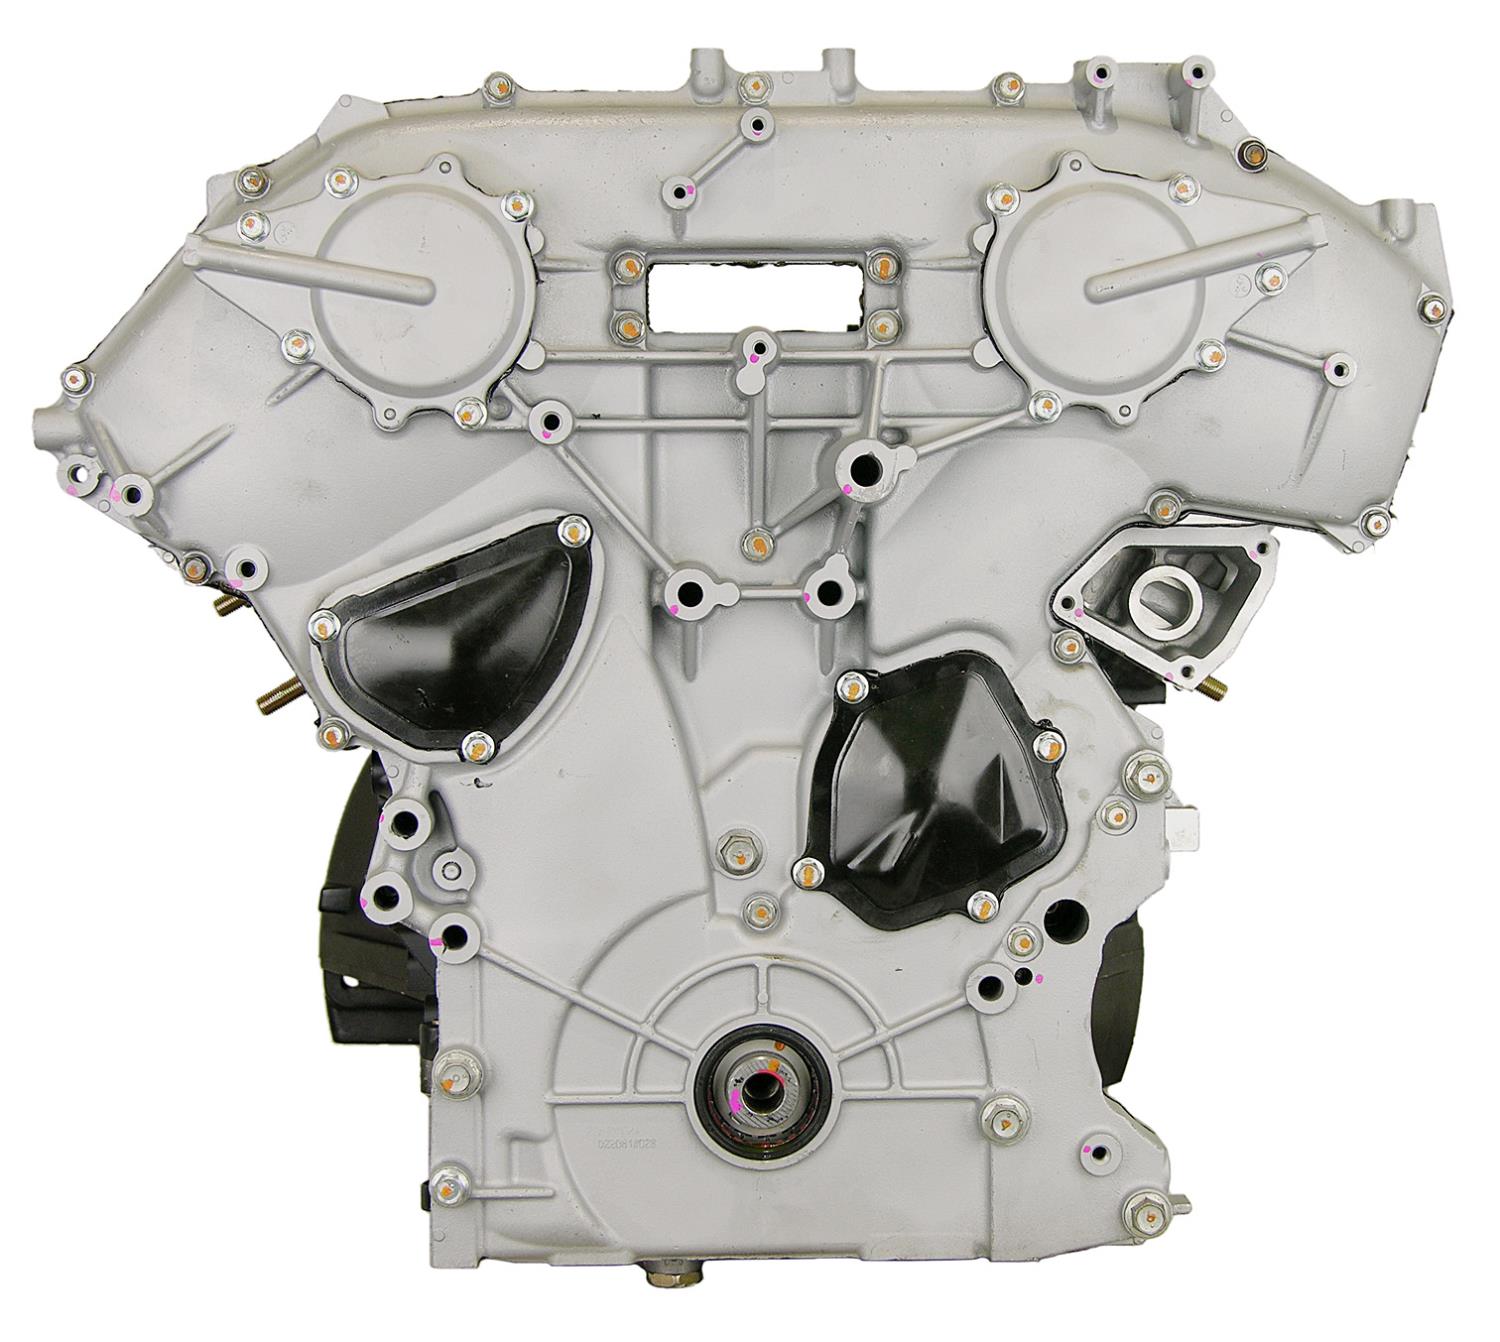 349 Remanufactured Crate Engine for 2005-2014 Nissan with 4.0L V6 VQ40DE